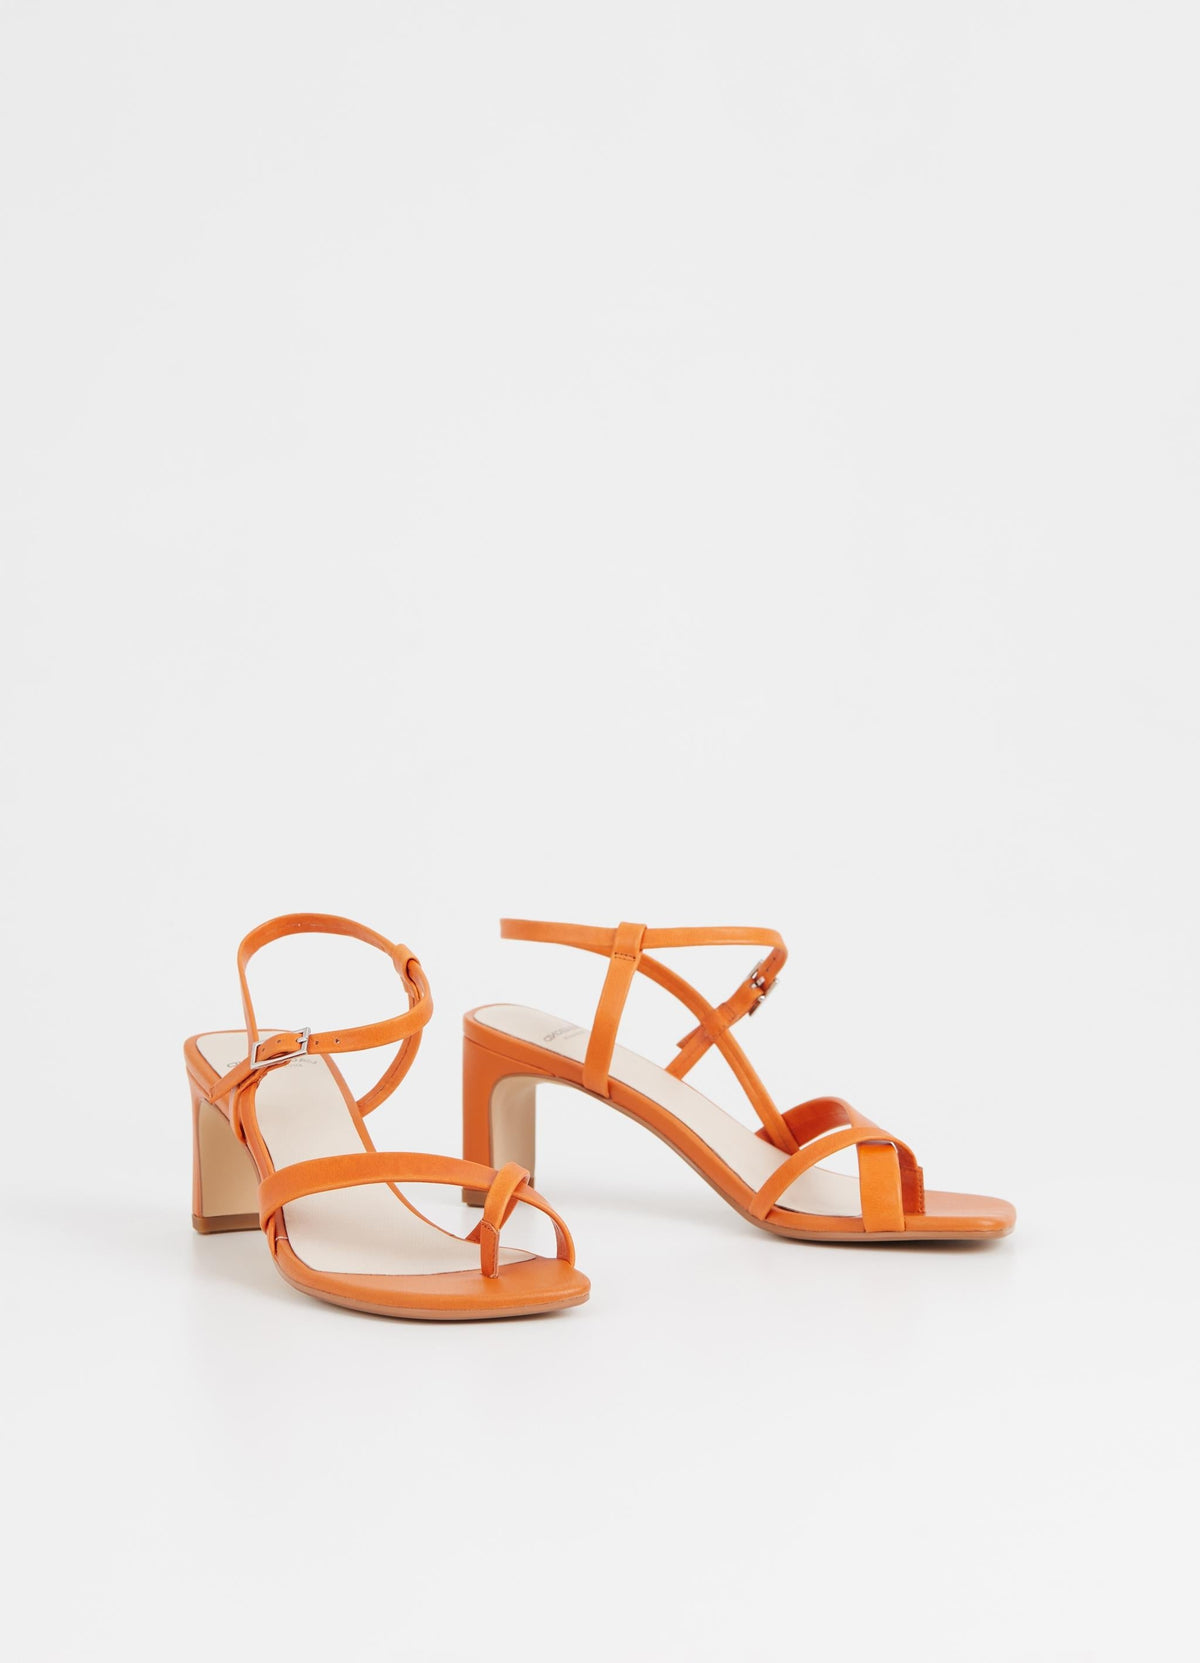 Orange strappy sandals with mid heel